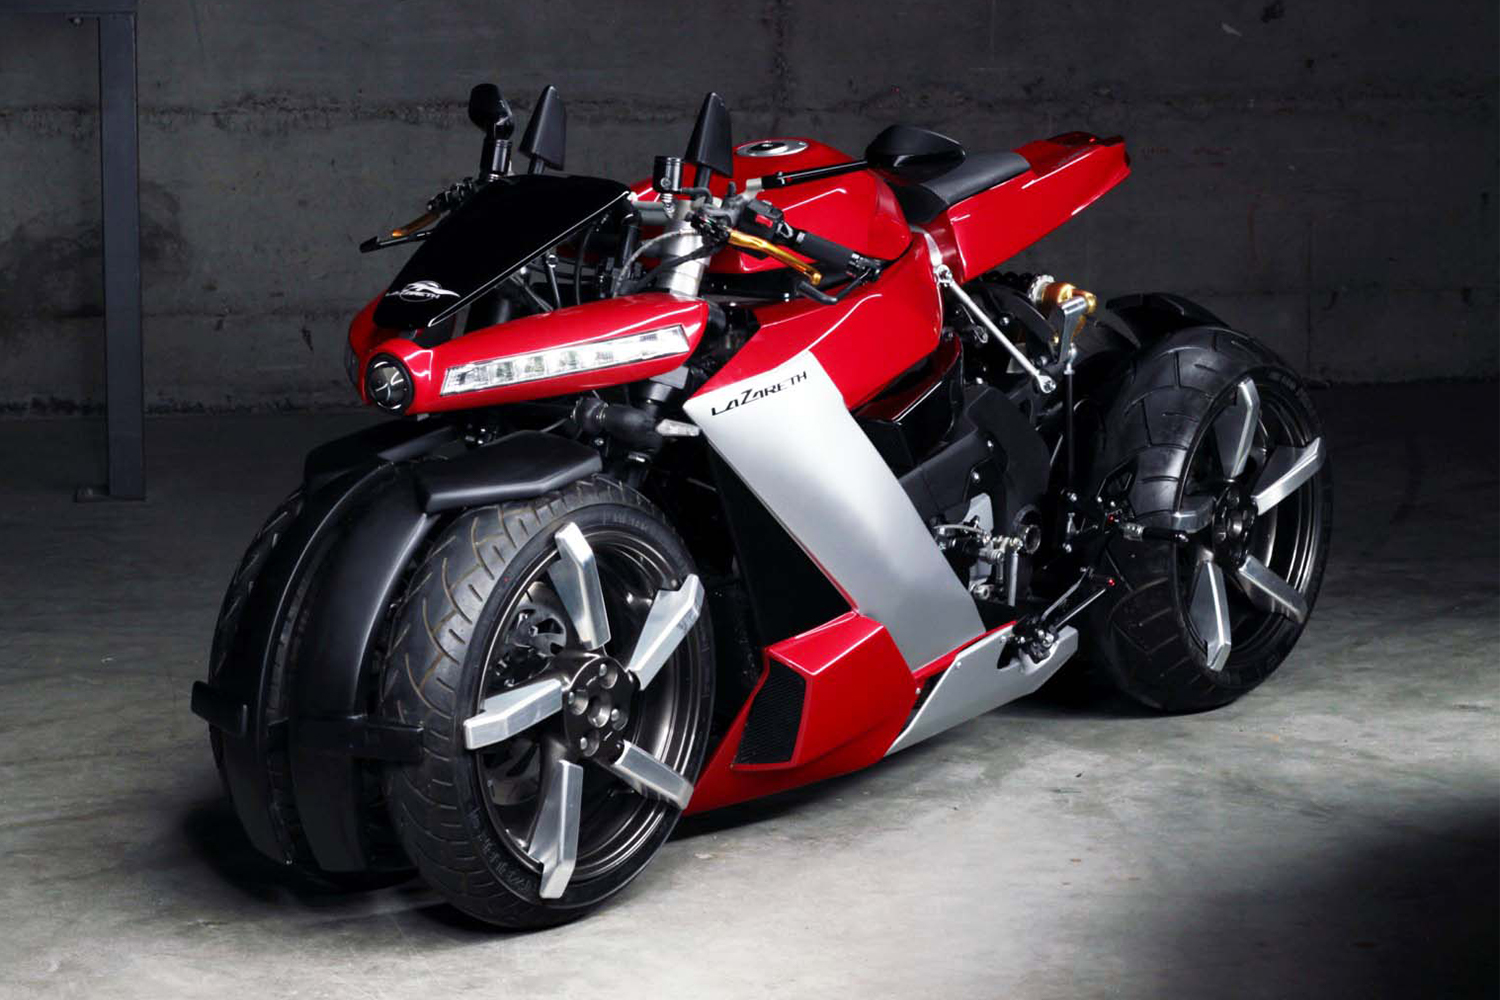 Lazareth's New Motorcycle Is a $100K Four-Wheeler - InsideHook